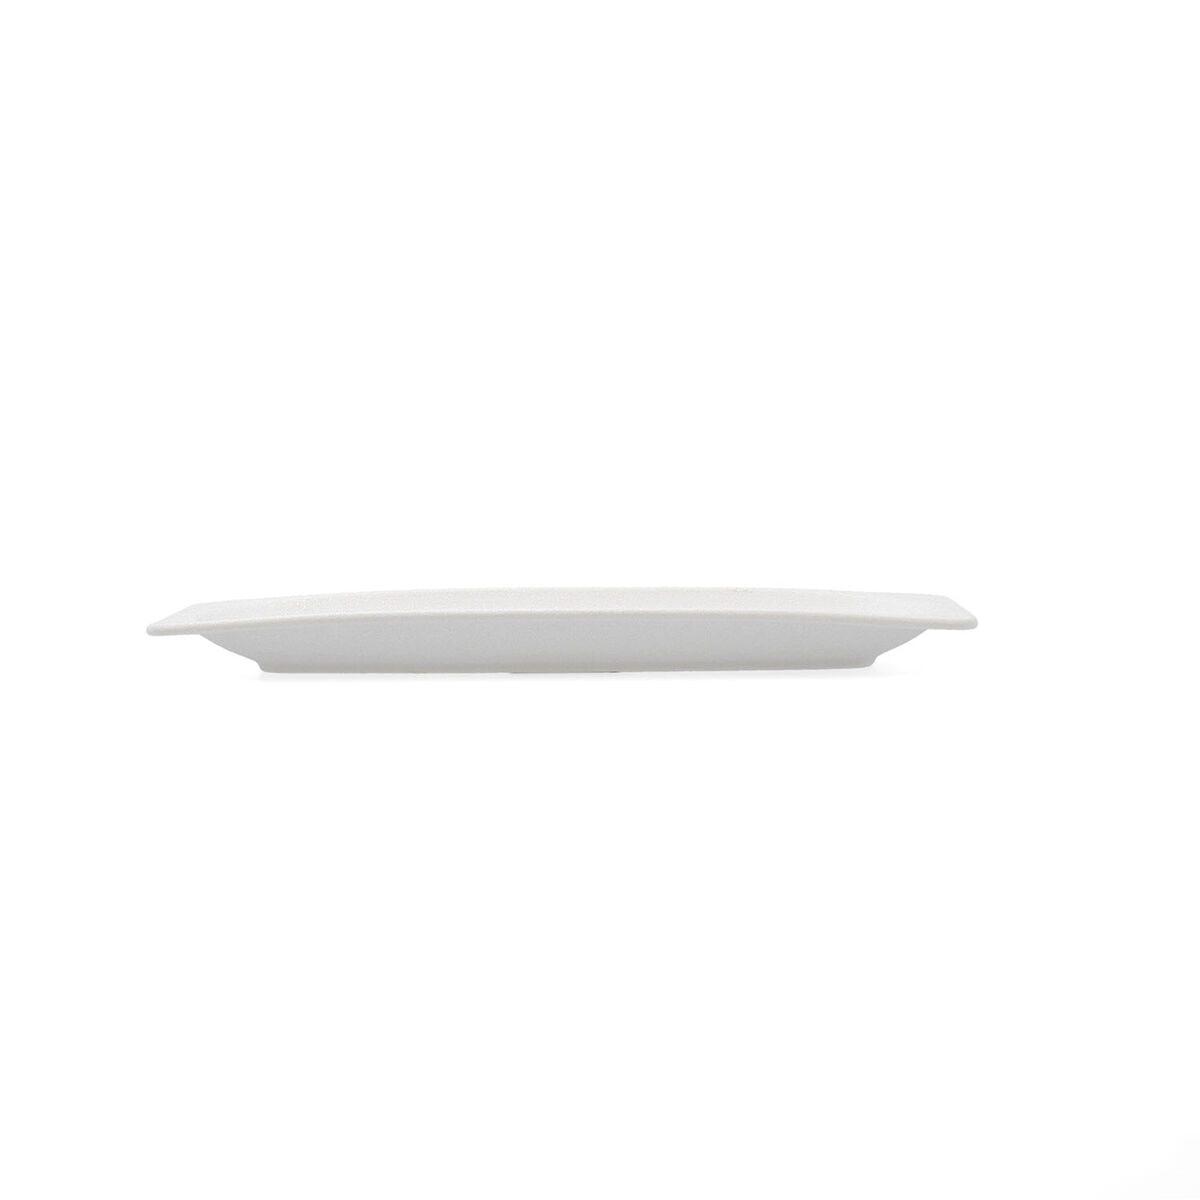 Snack tray Bidasoa Fosil White Ceramic Aluminium Oxide 25,6 x 9,1 x 2,3 cm (9Units)